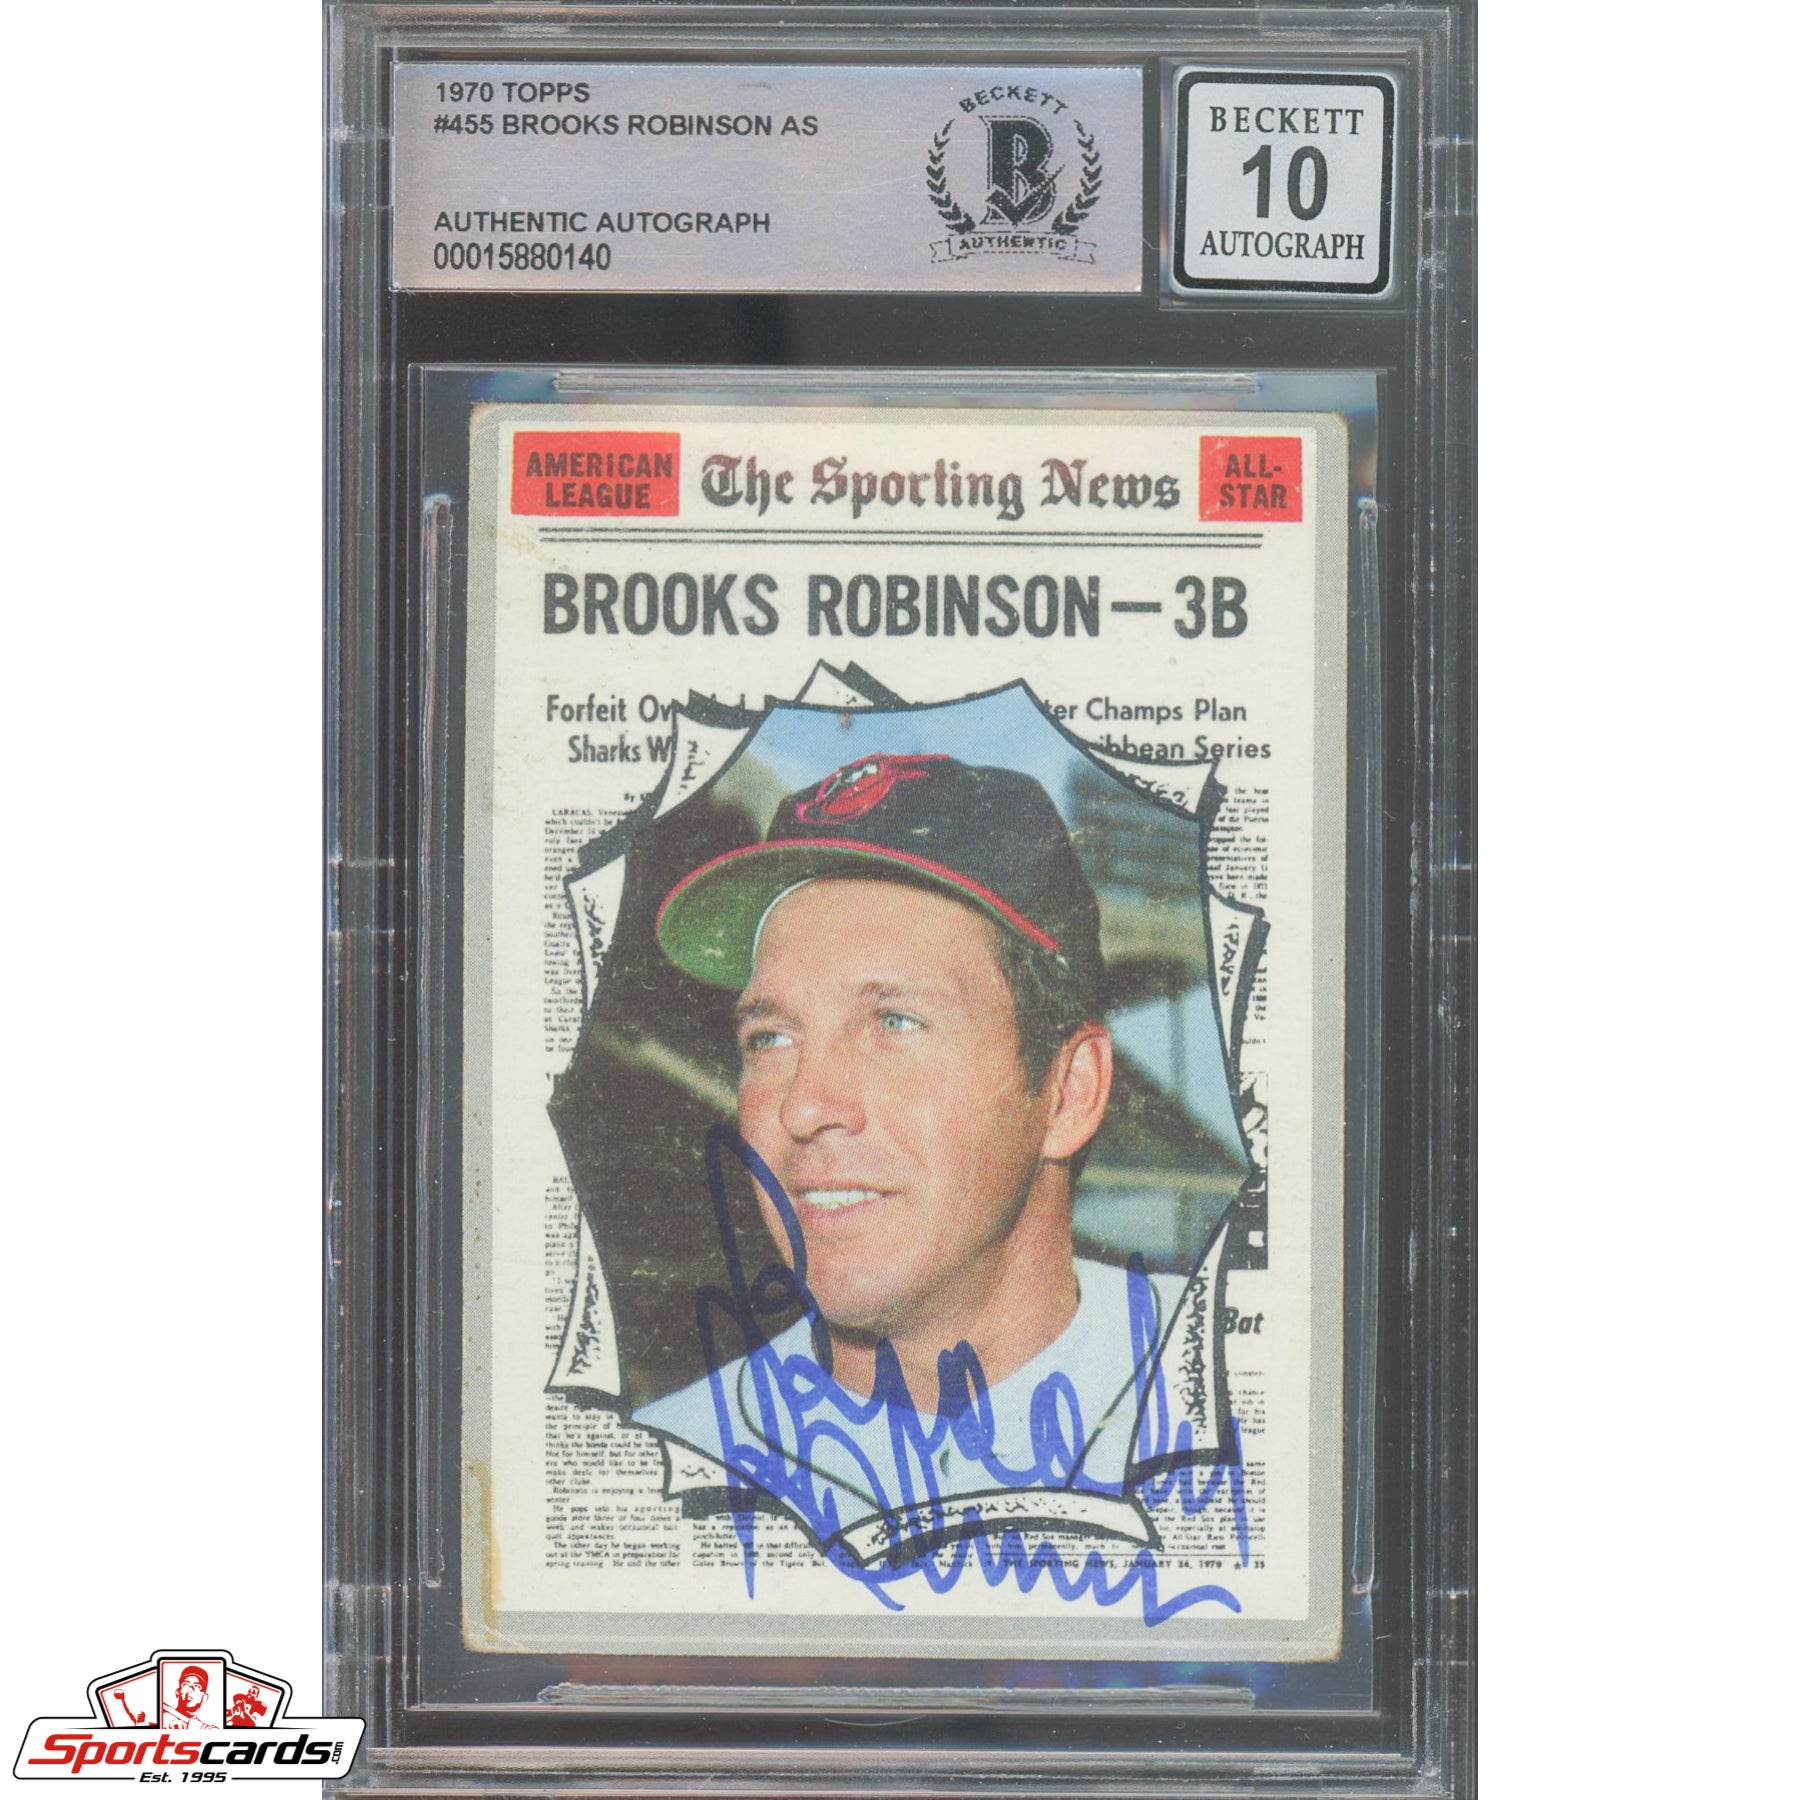 1970 Topps #455 Brooks Robinson Signed Auto Beckett BAS 10 Orioles